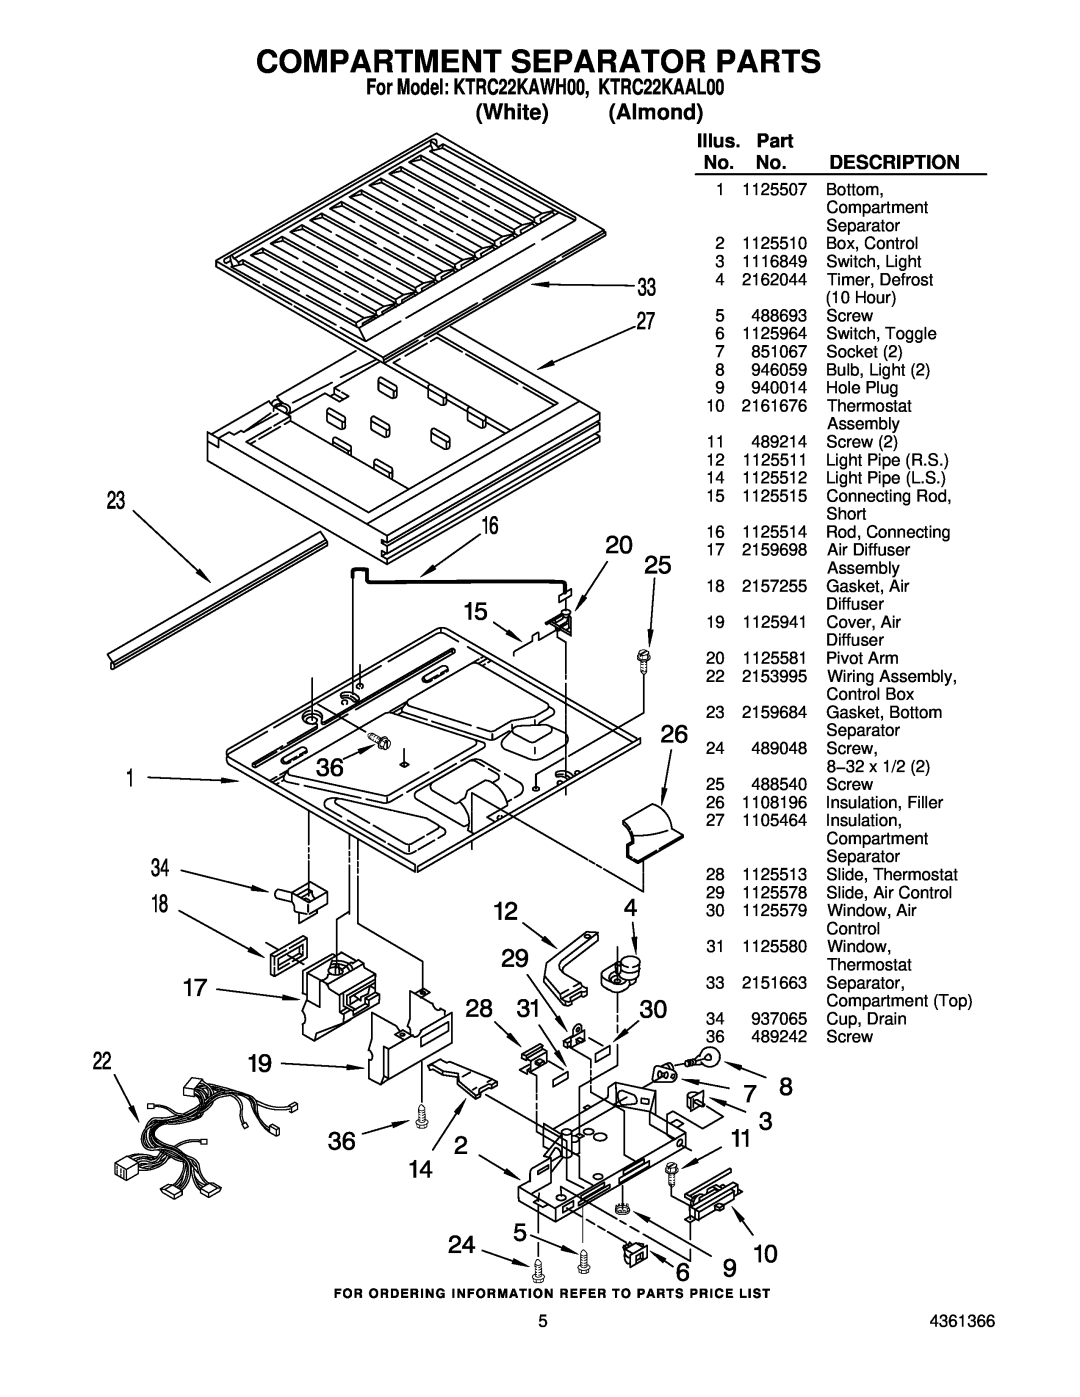 KitchenAid manual Compartment Separator Parts, For Model KTRC22KAWH00, KTRC22KAAL00 White Almond, Illus, Description 